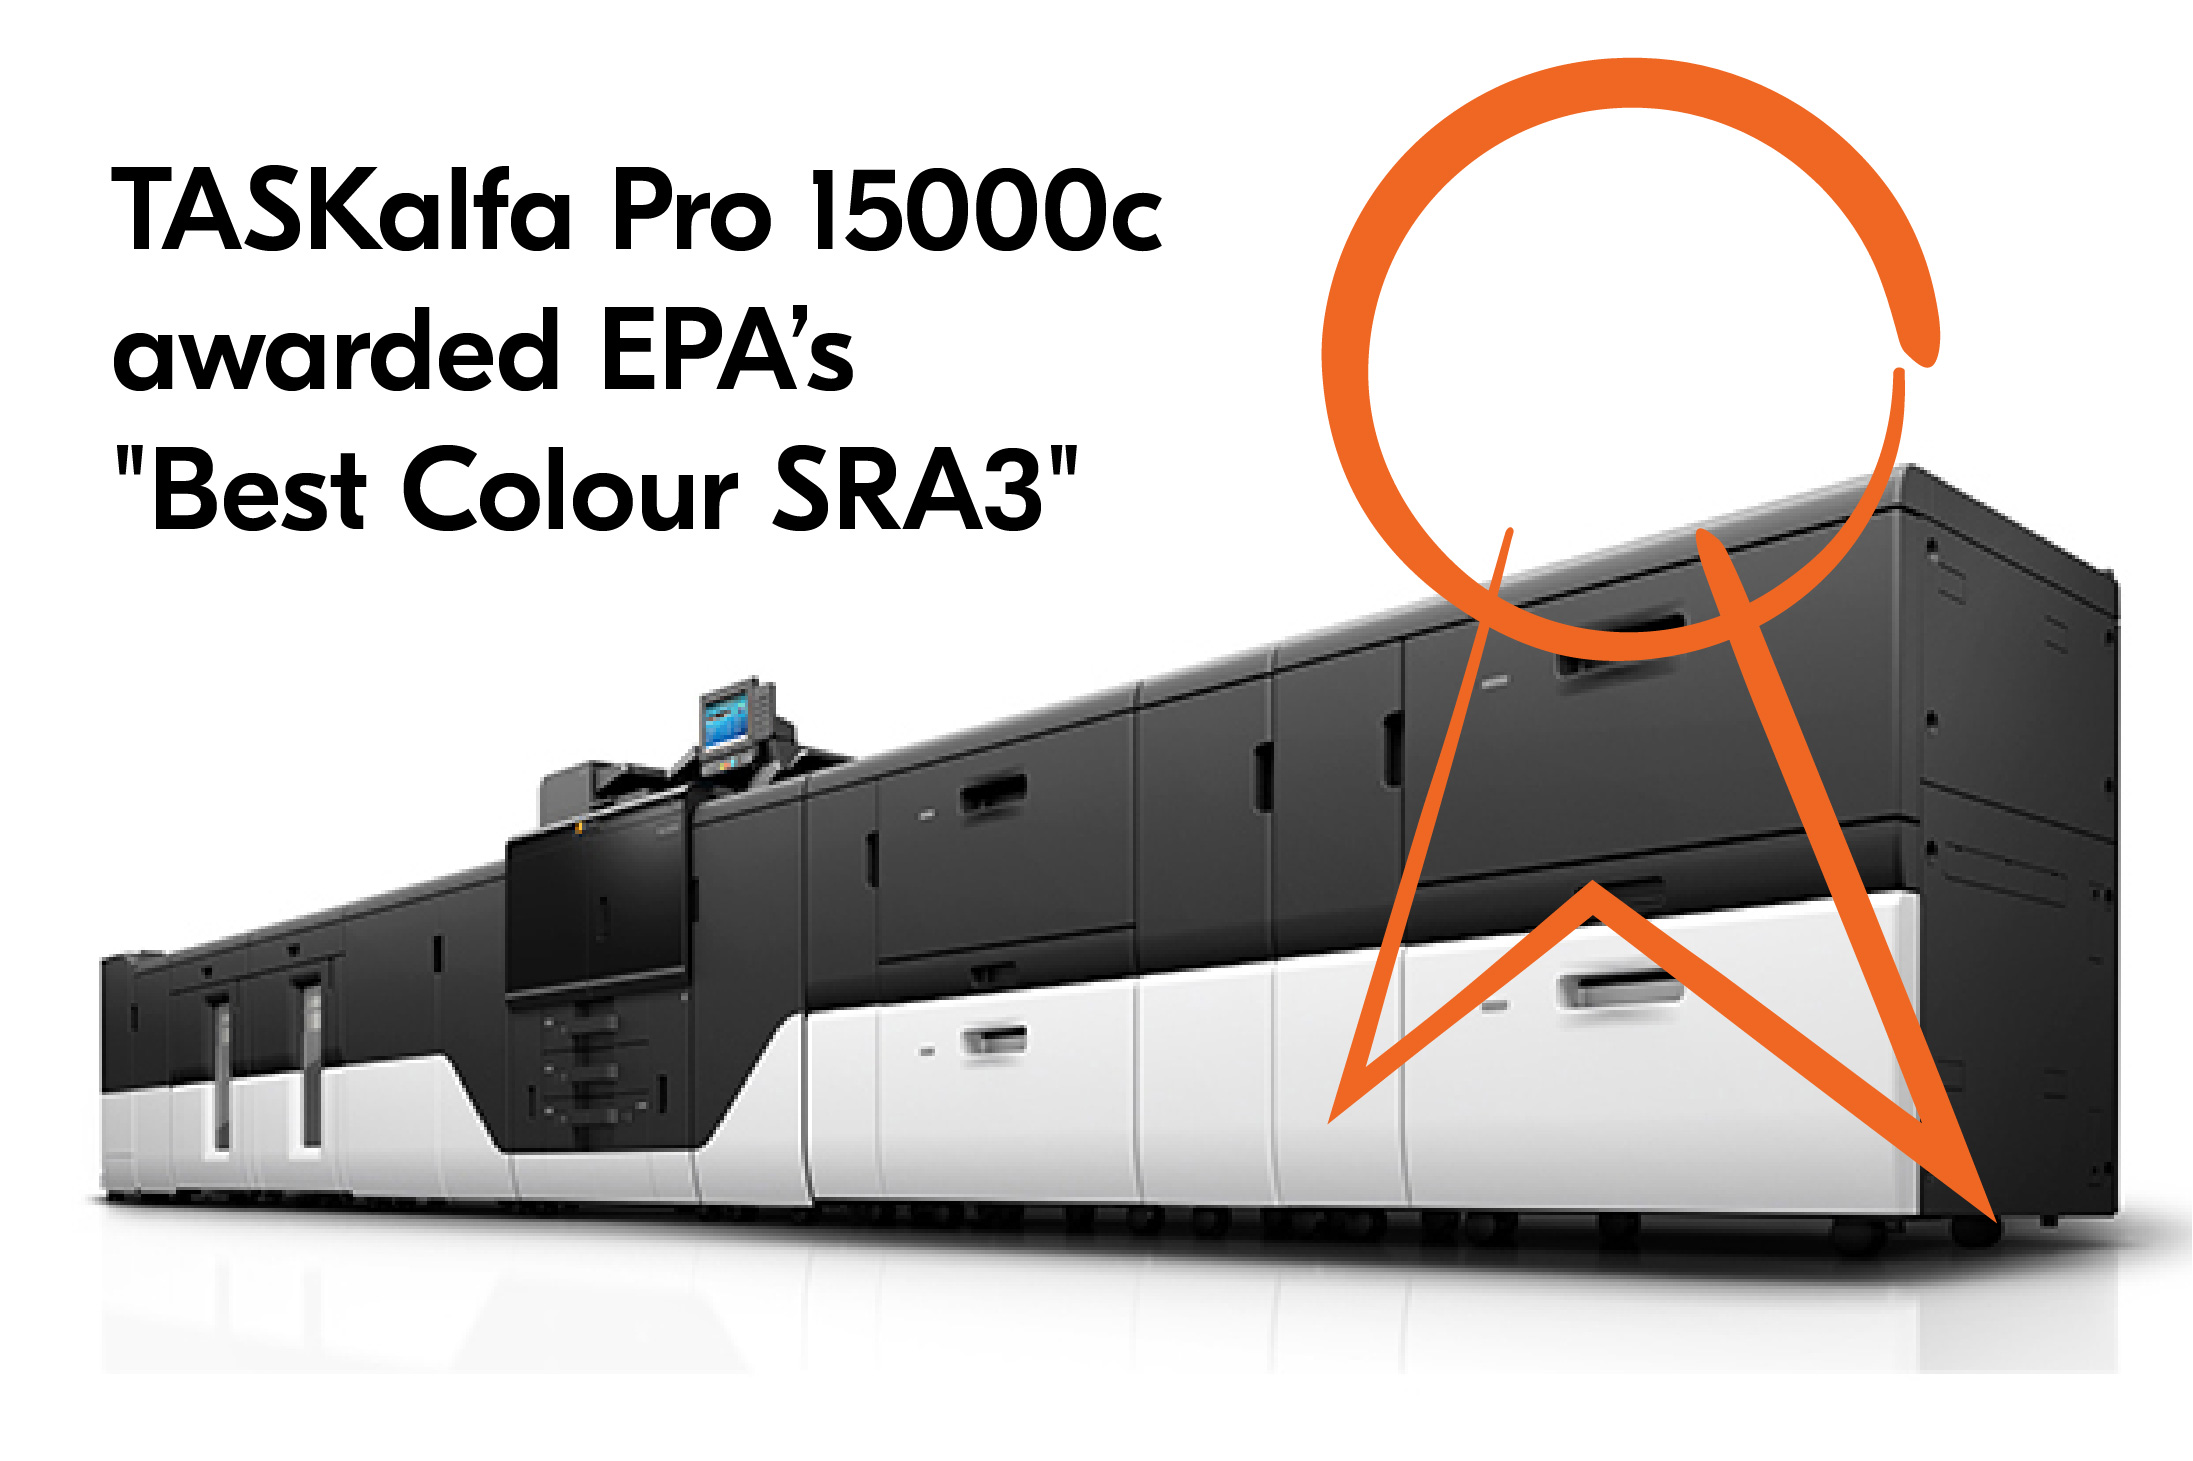 Kyocera's TASKalfa Pro 15000c wins the Best Colour SRA3 Award of the European Digital Press Association